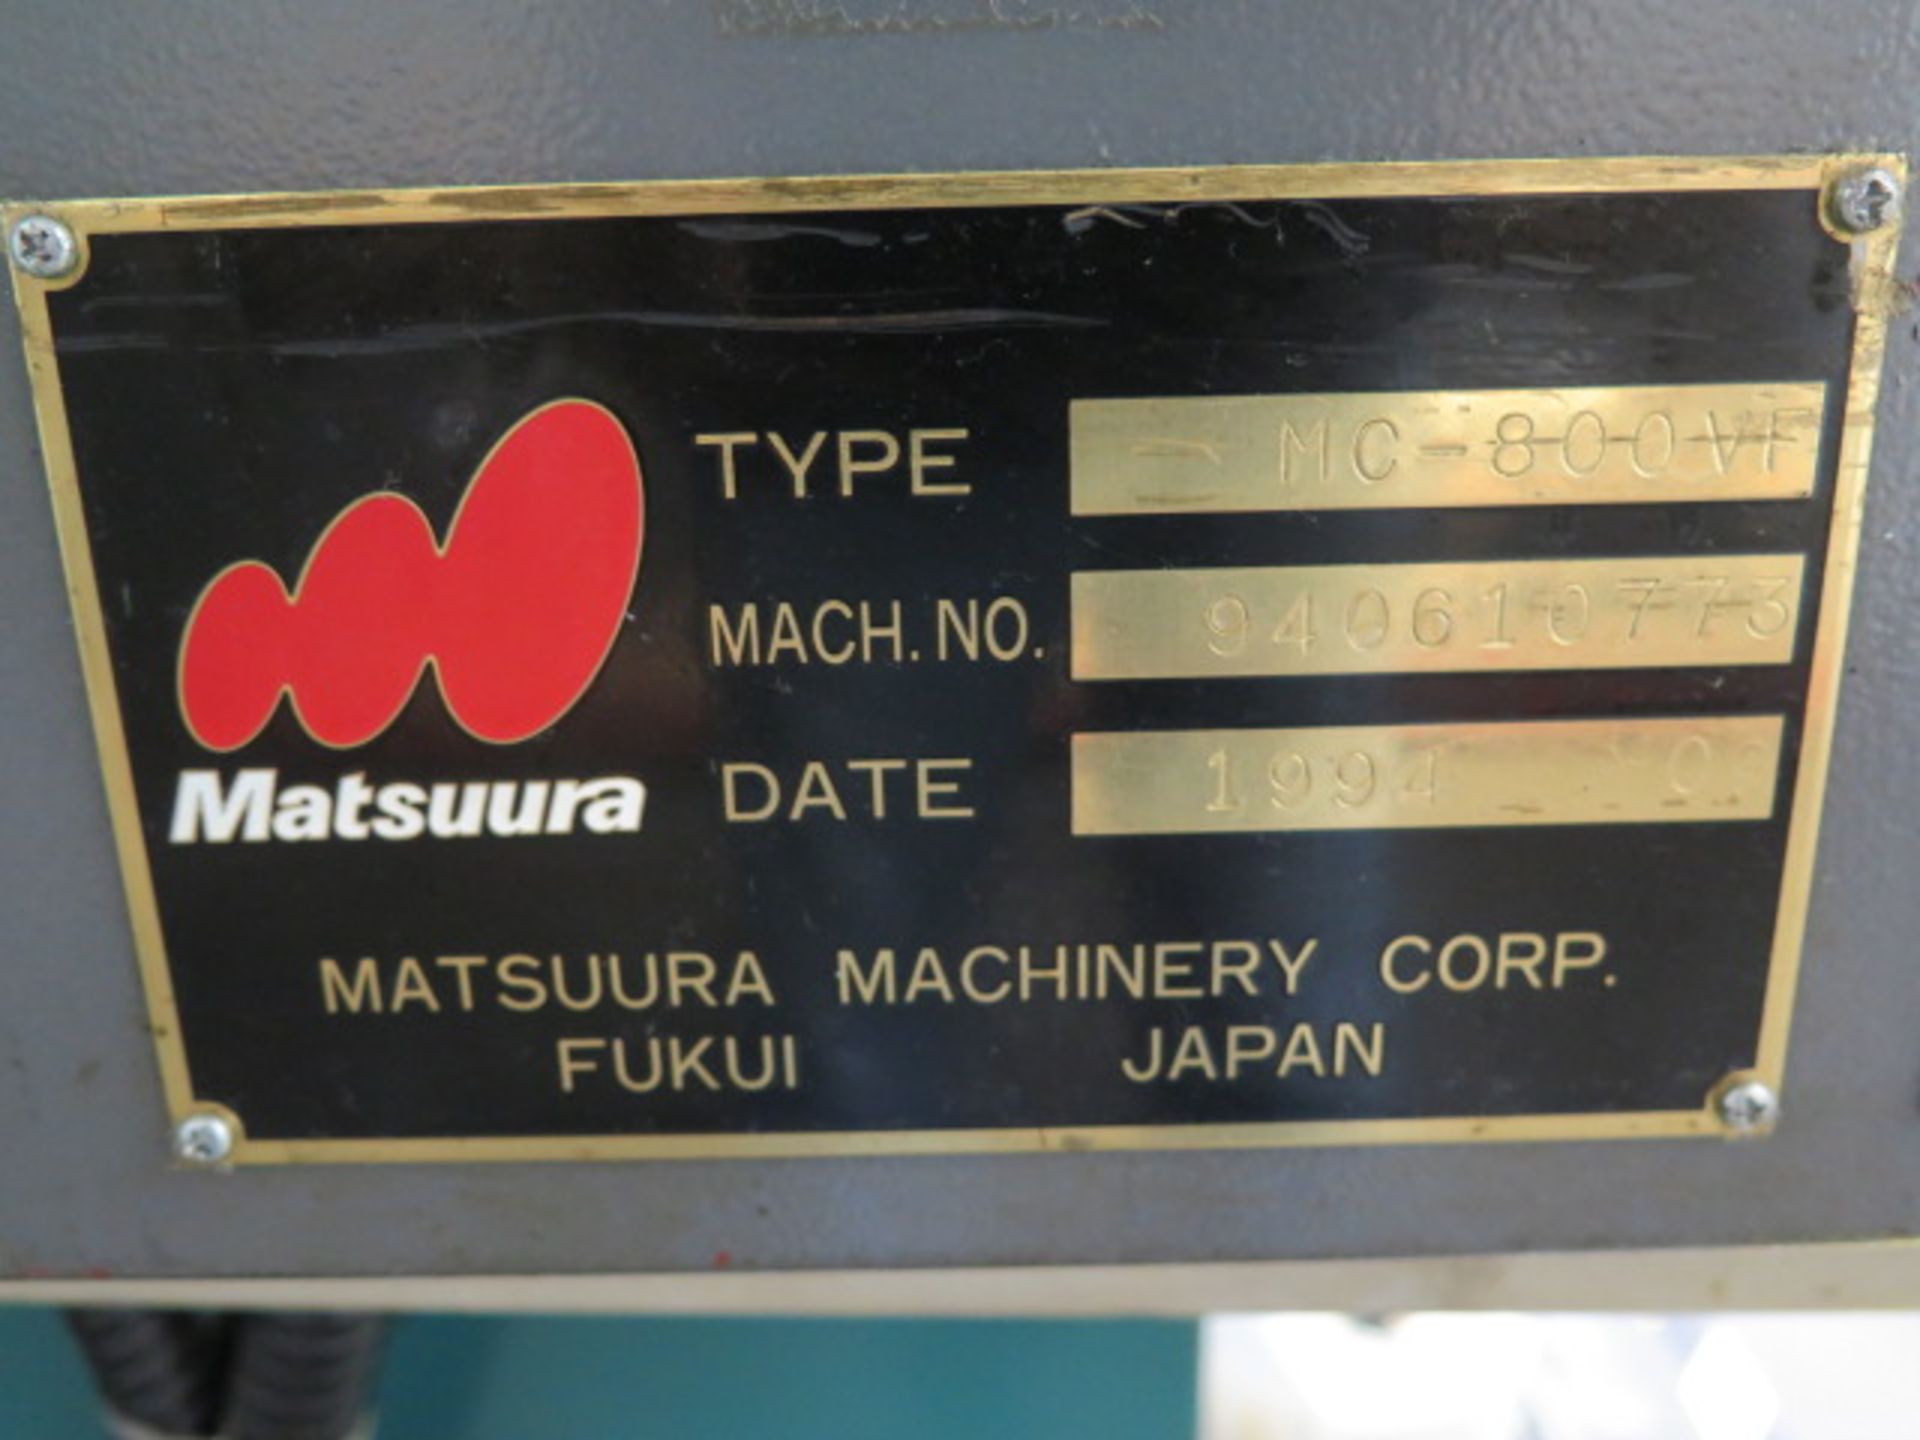 1994 Matsuura MC-800VF CNC Vertical Machining Center s/n 940610773 w/ Yasnac Controls, 30-Station A - Image 17 of 18